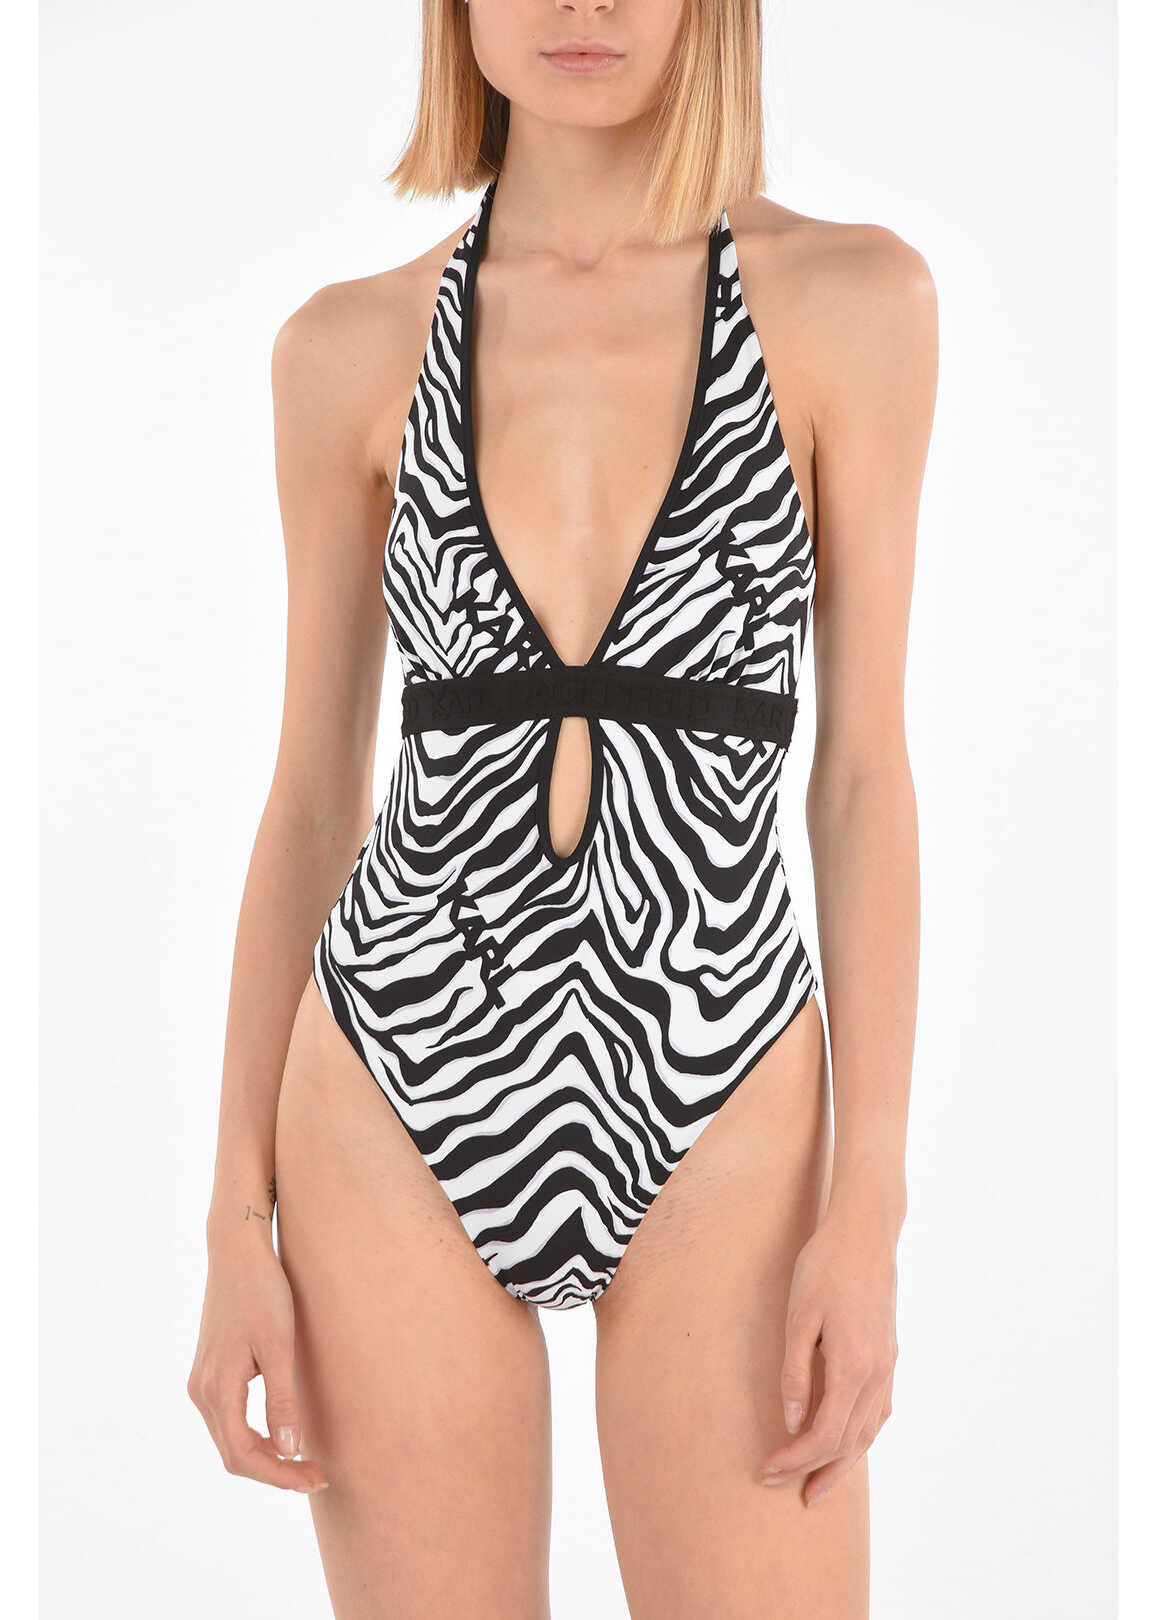 Karl Lagerfeld Zebra Printed Swimsuit Black & White image0